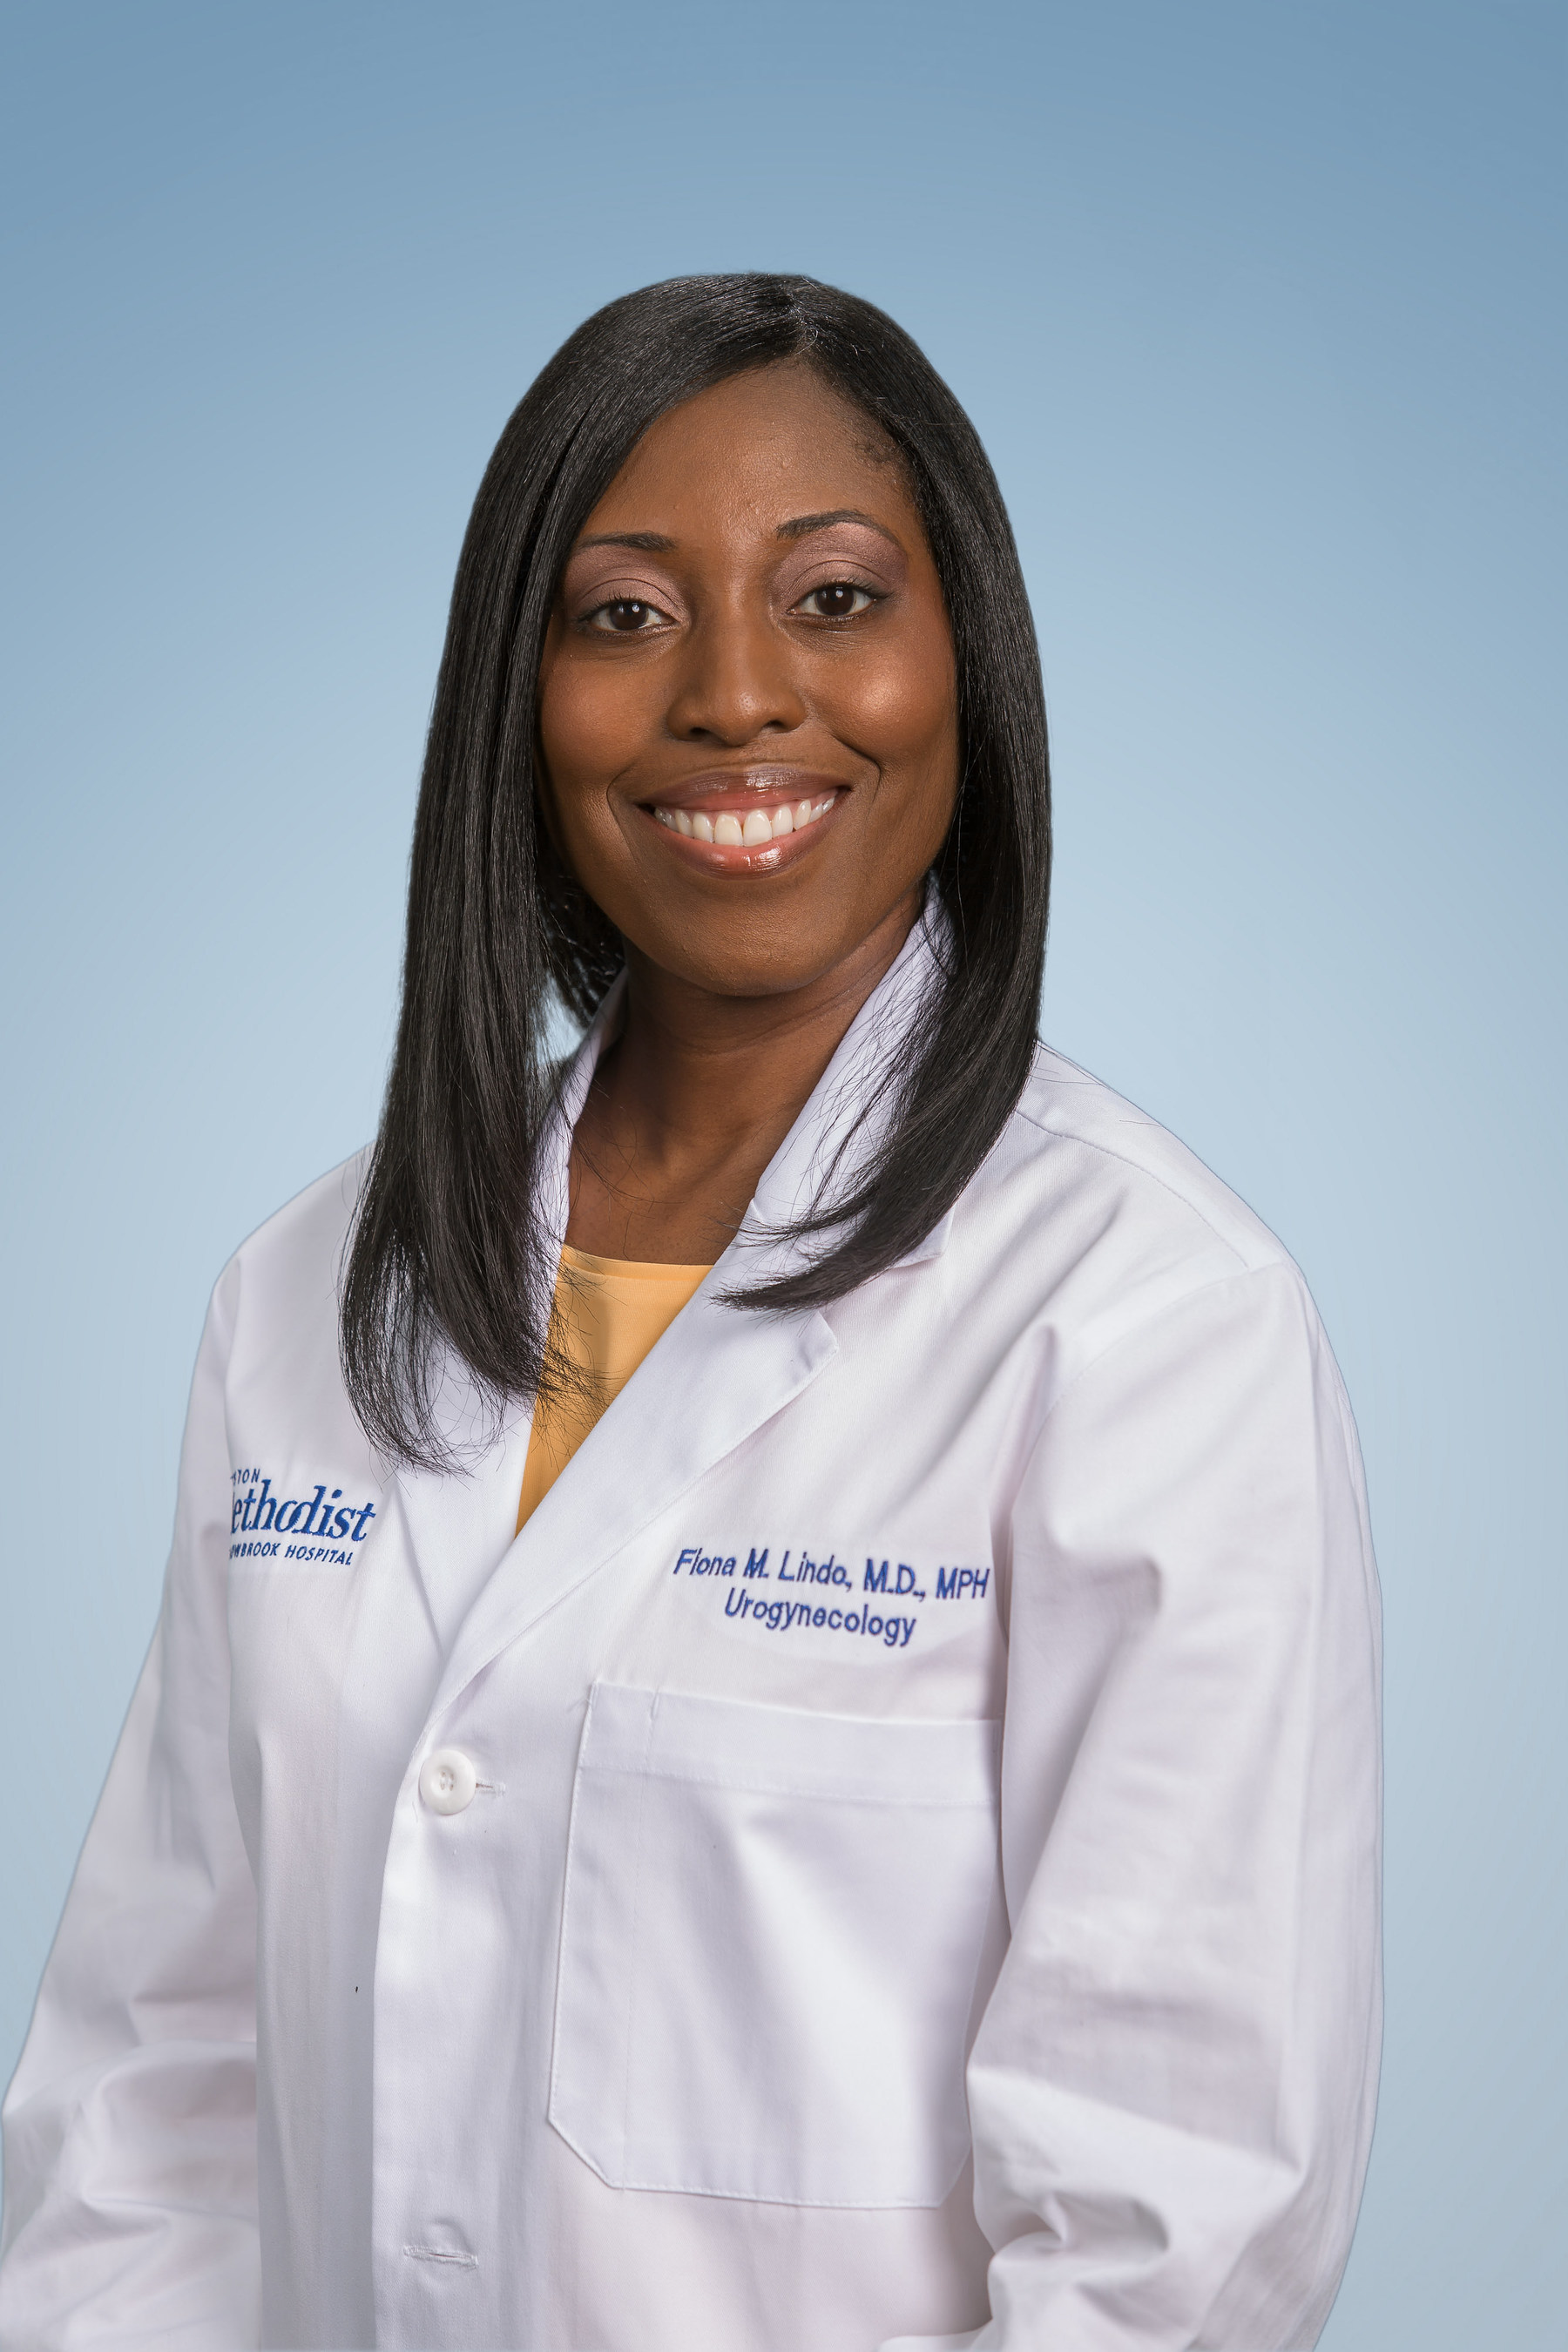 Urogynecologist Dr. Fiona M. Lindo joins Houston Methodist Urogynecology Associates at Houston Methodist Willowbrook Hospital.